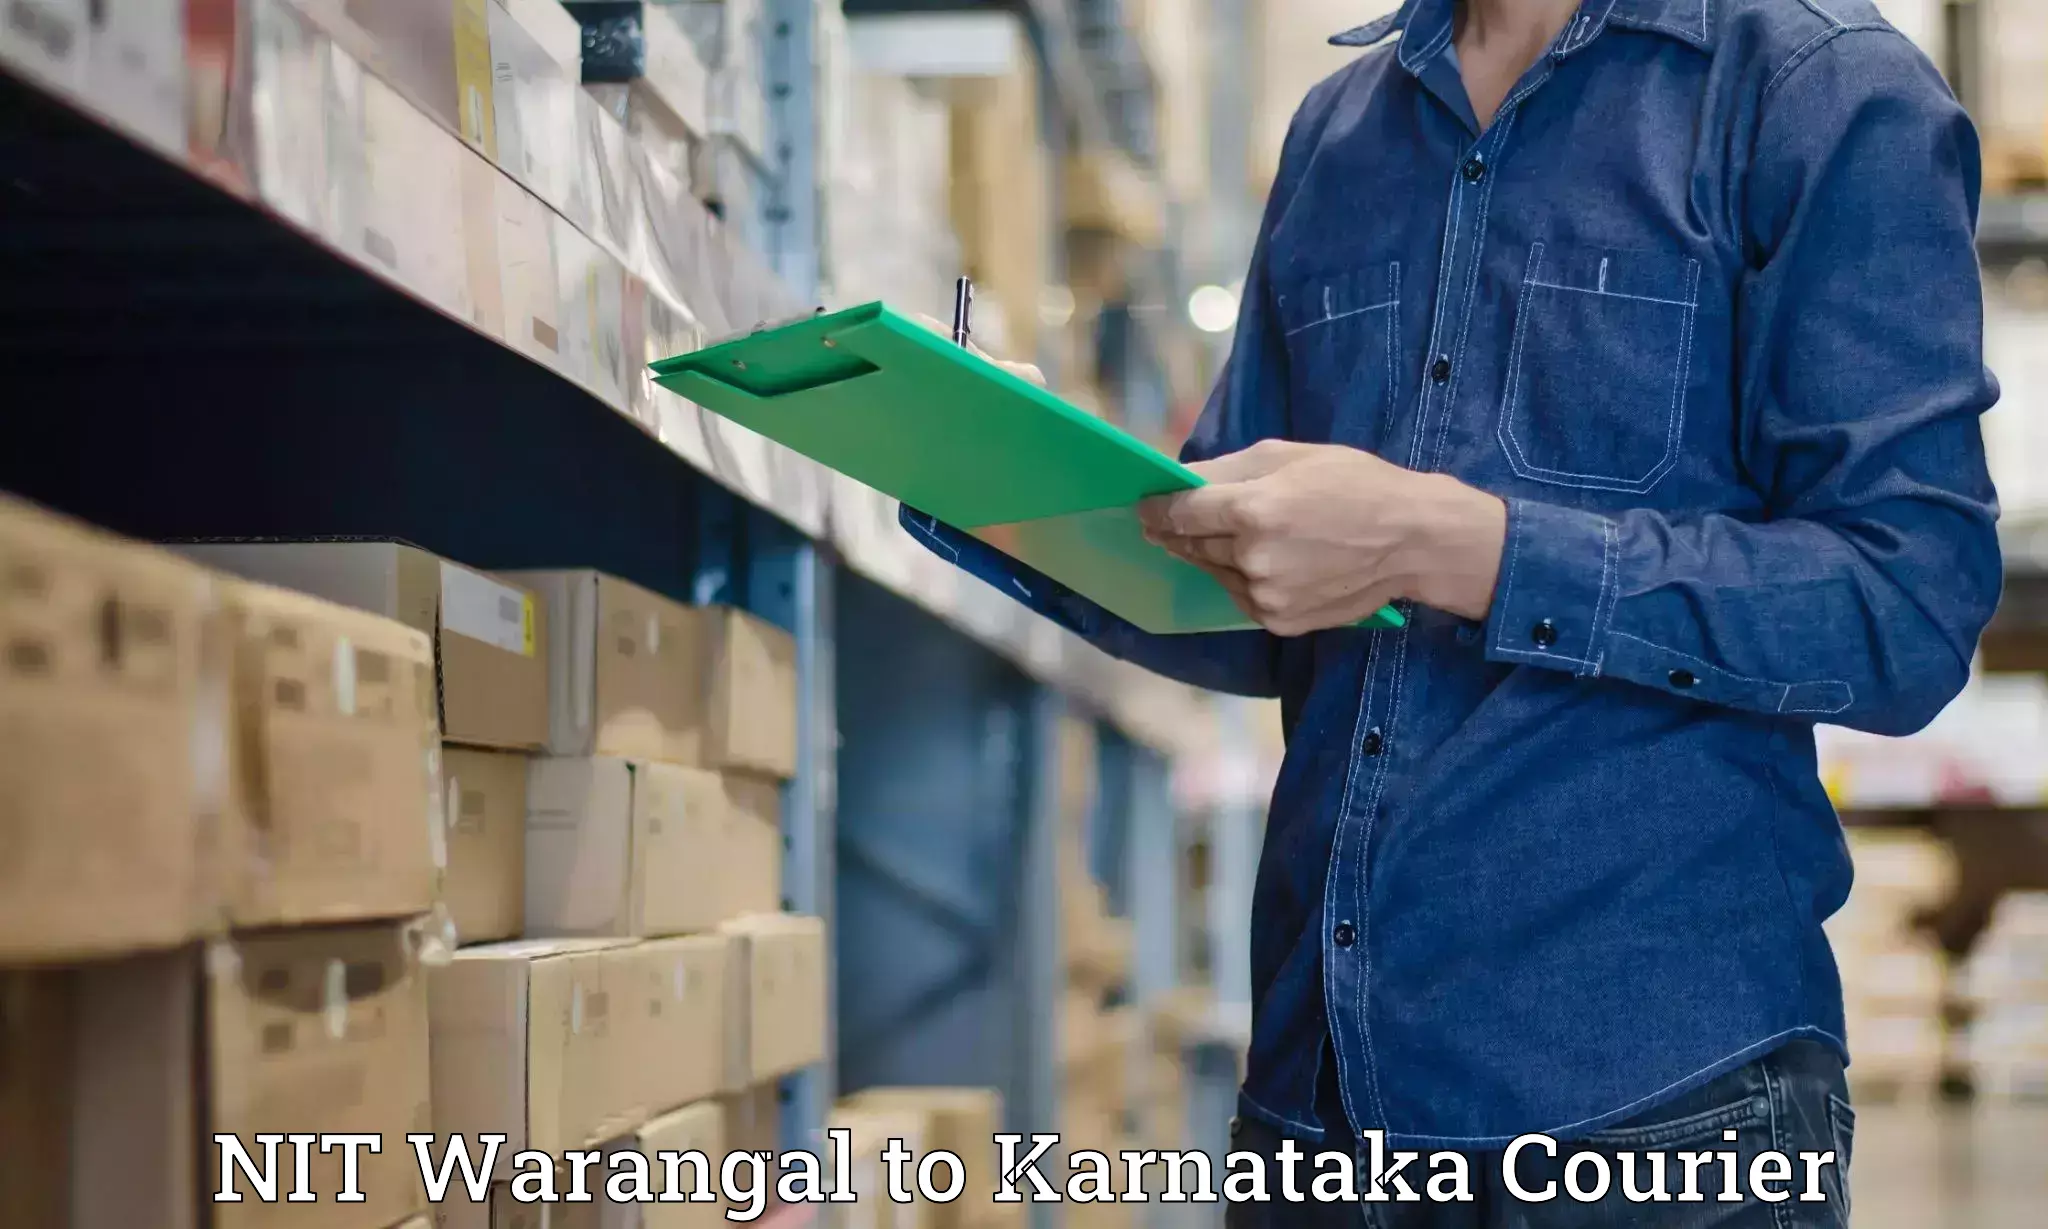 Professional courier services in NIT Warangal to Karnataka